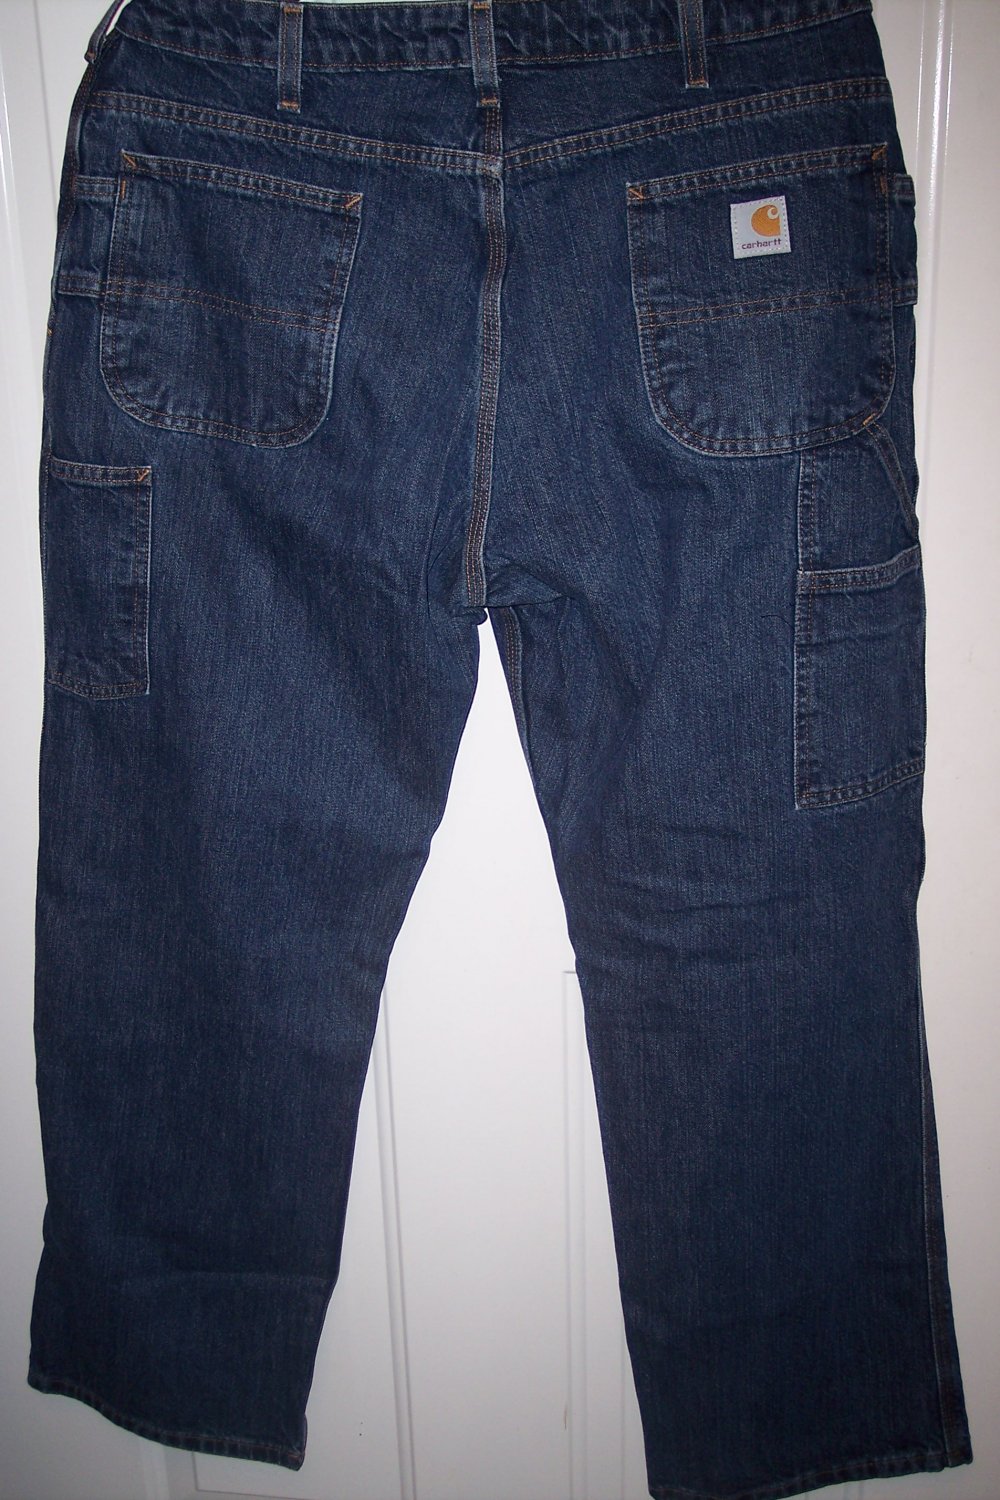 Carhartt Womens 14 x 30 Carpenter Jeans WB013 VIO Washed Vintage Indigo ...